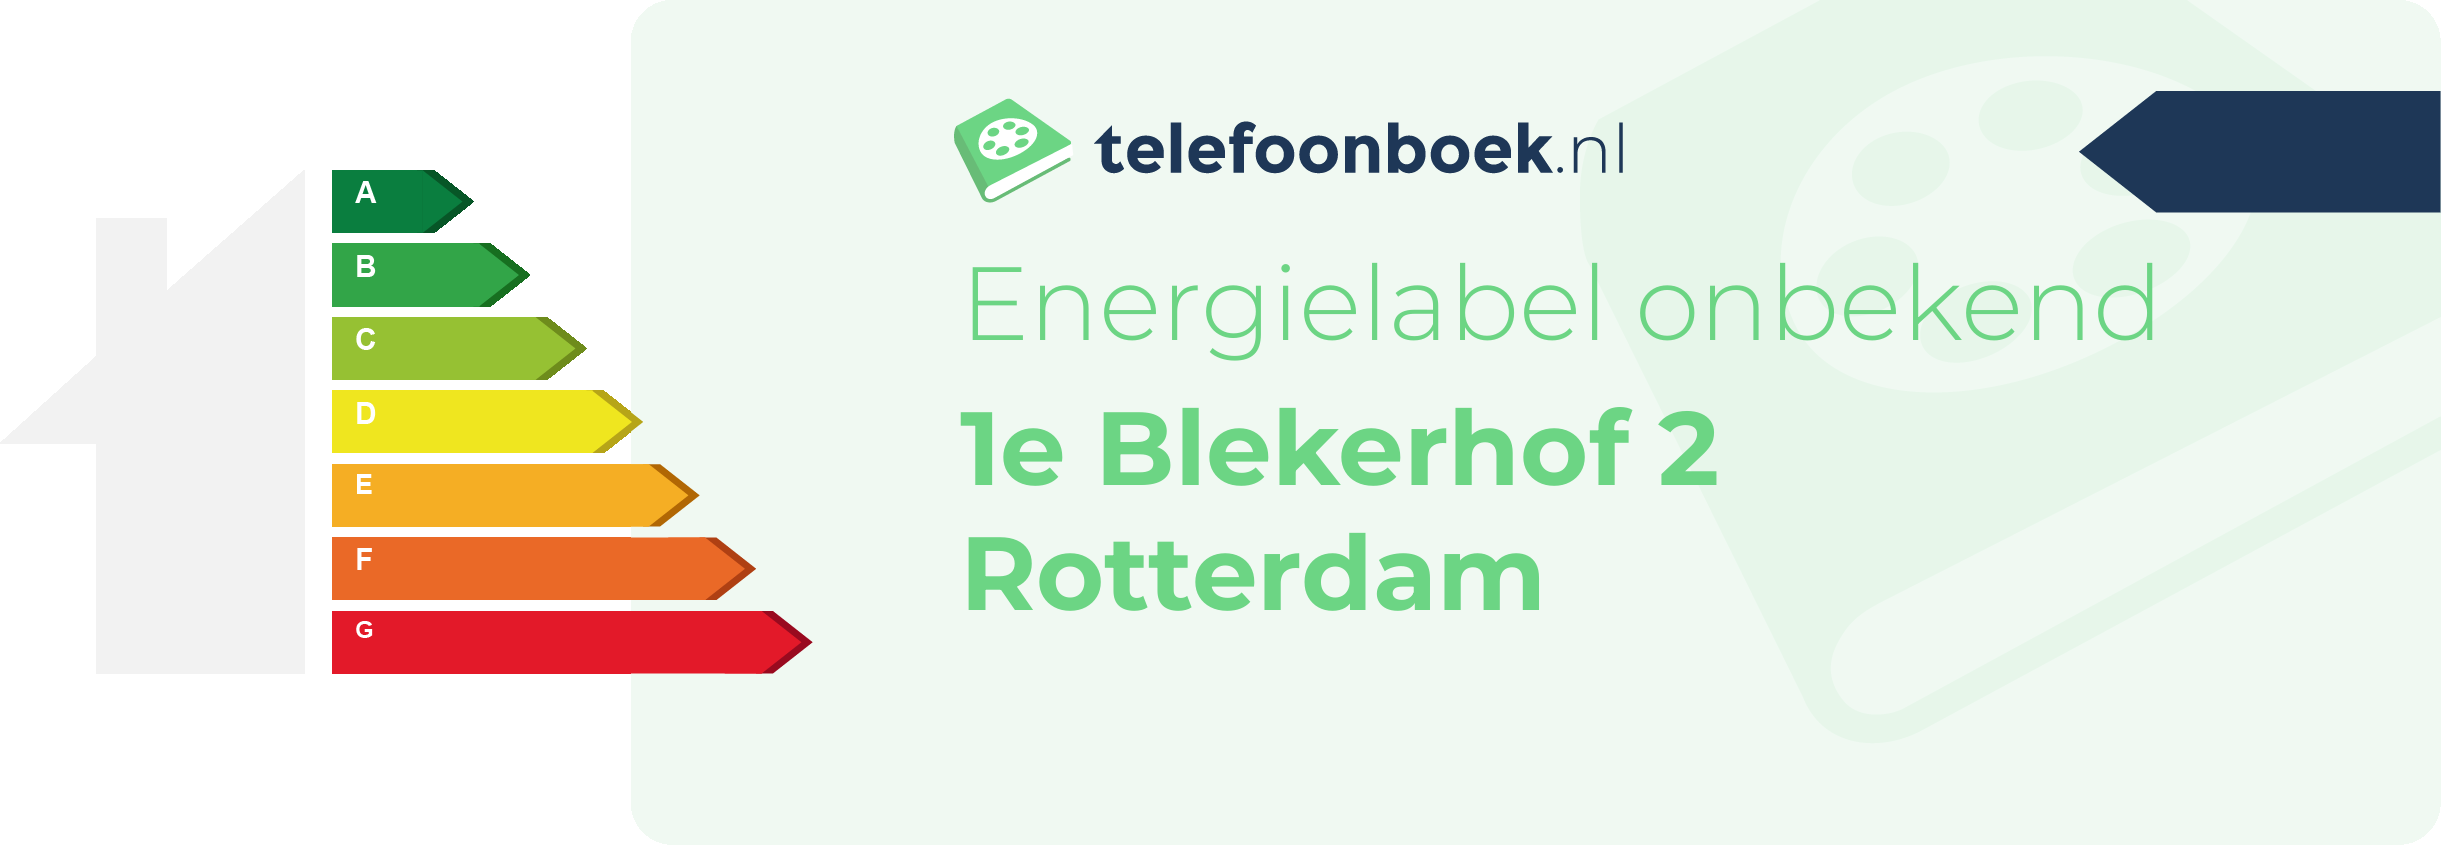 Energielabel 1e Blekerhof 2 Rotterdam